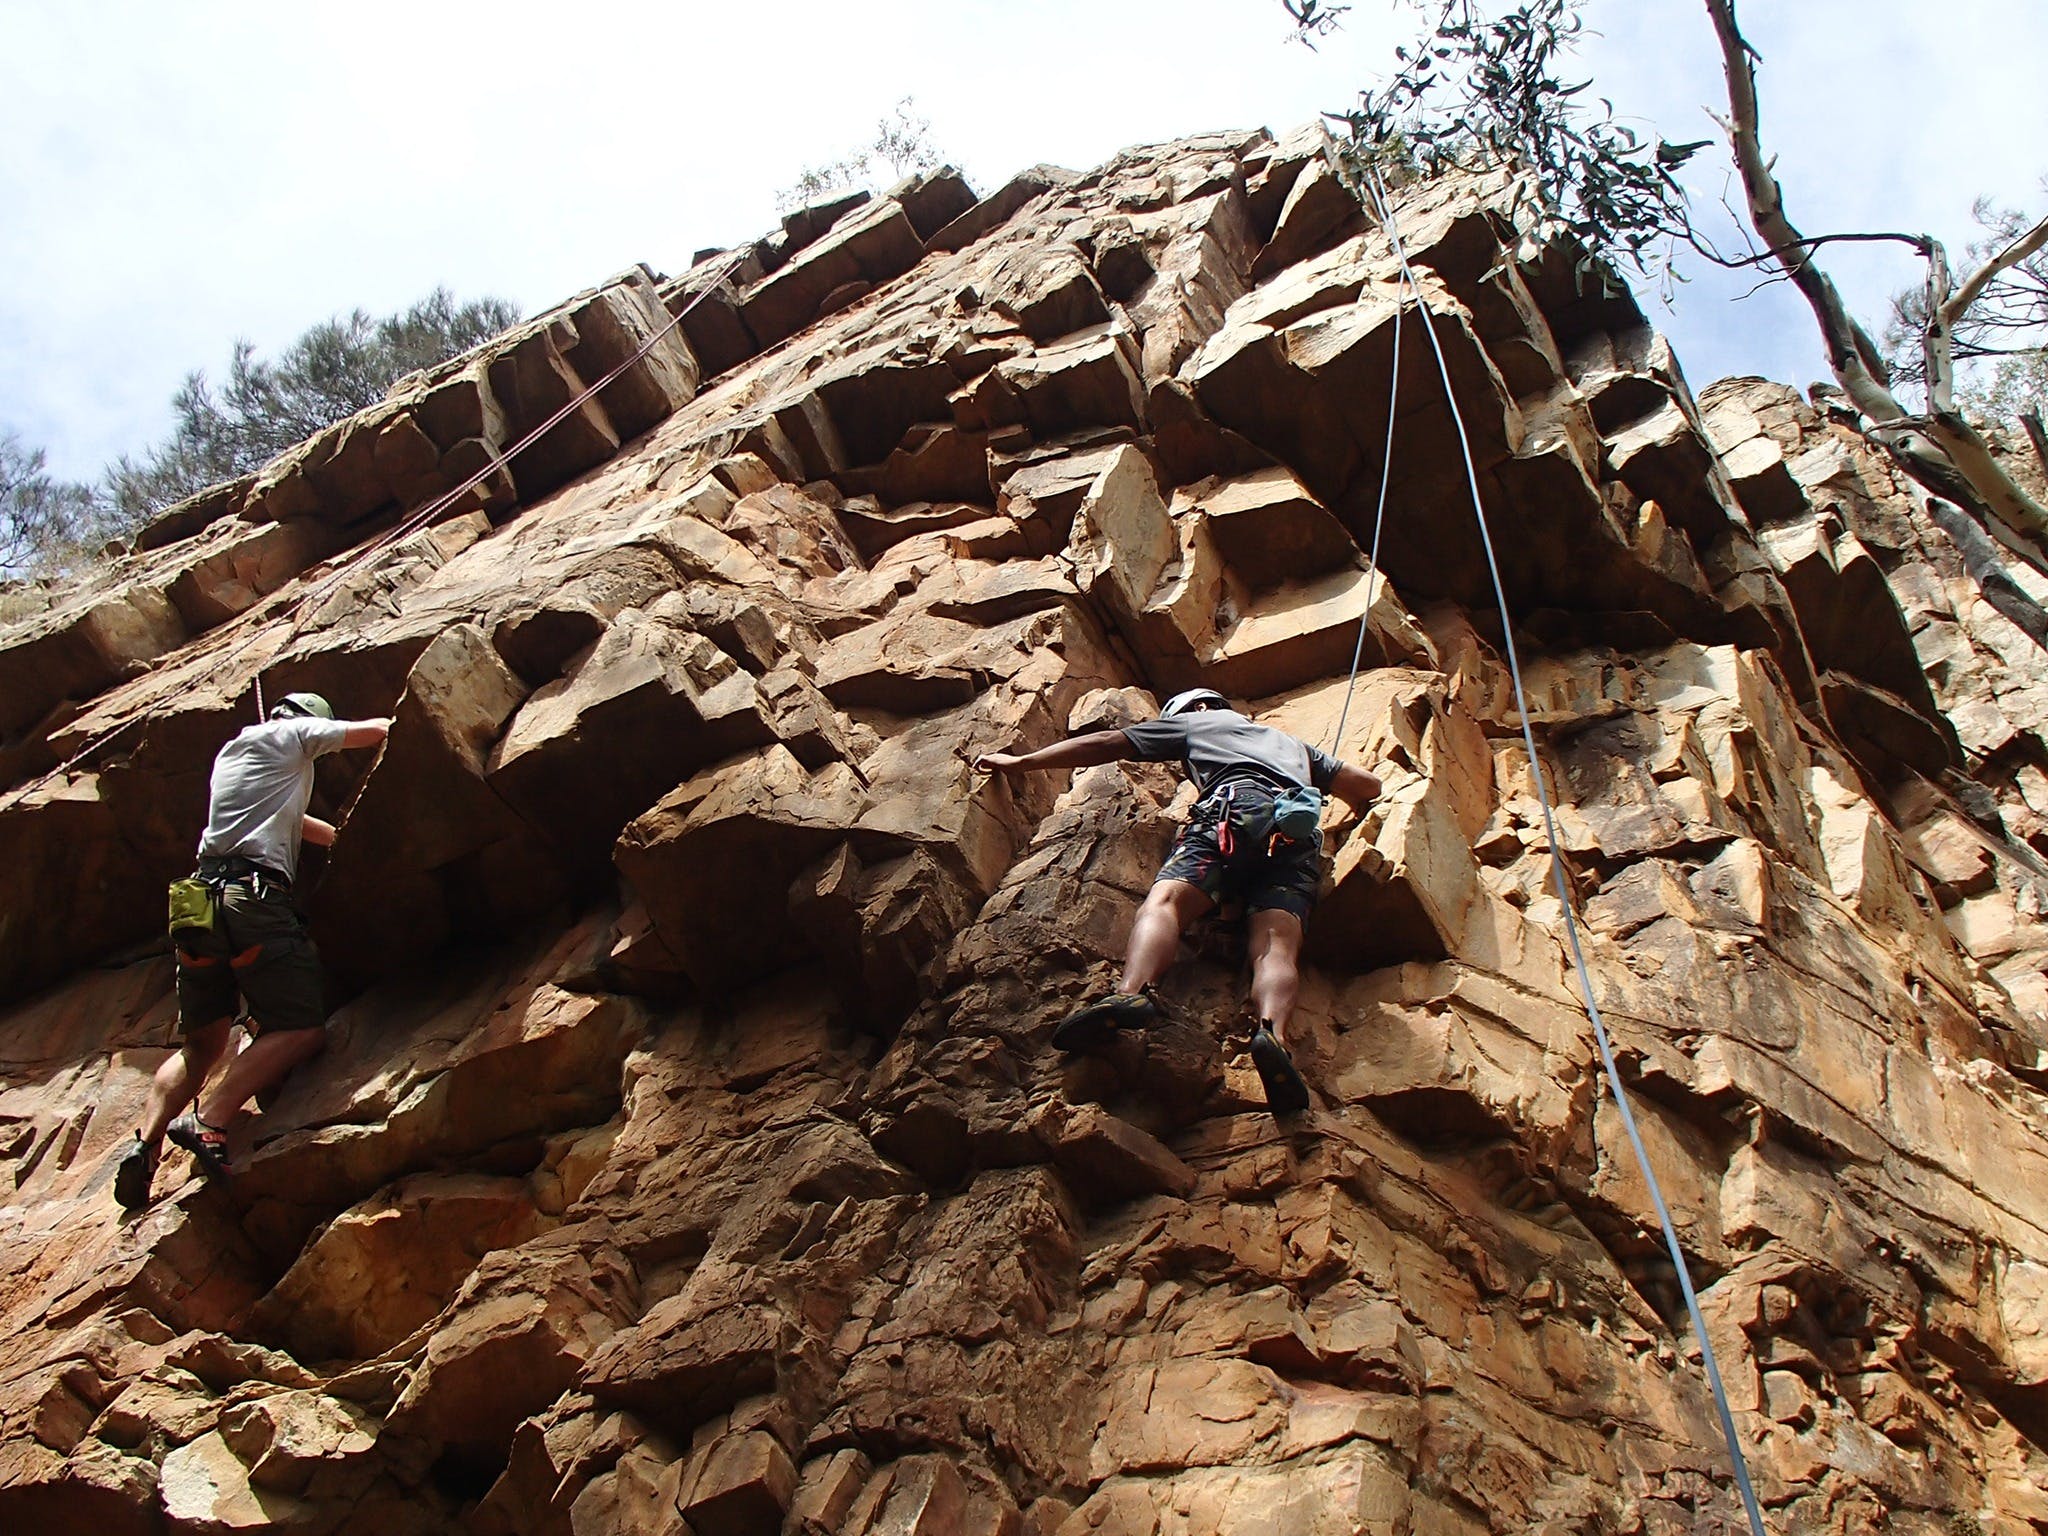 Rock Climbing in Morialta - Find Attractions